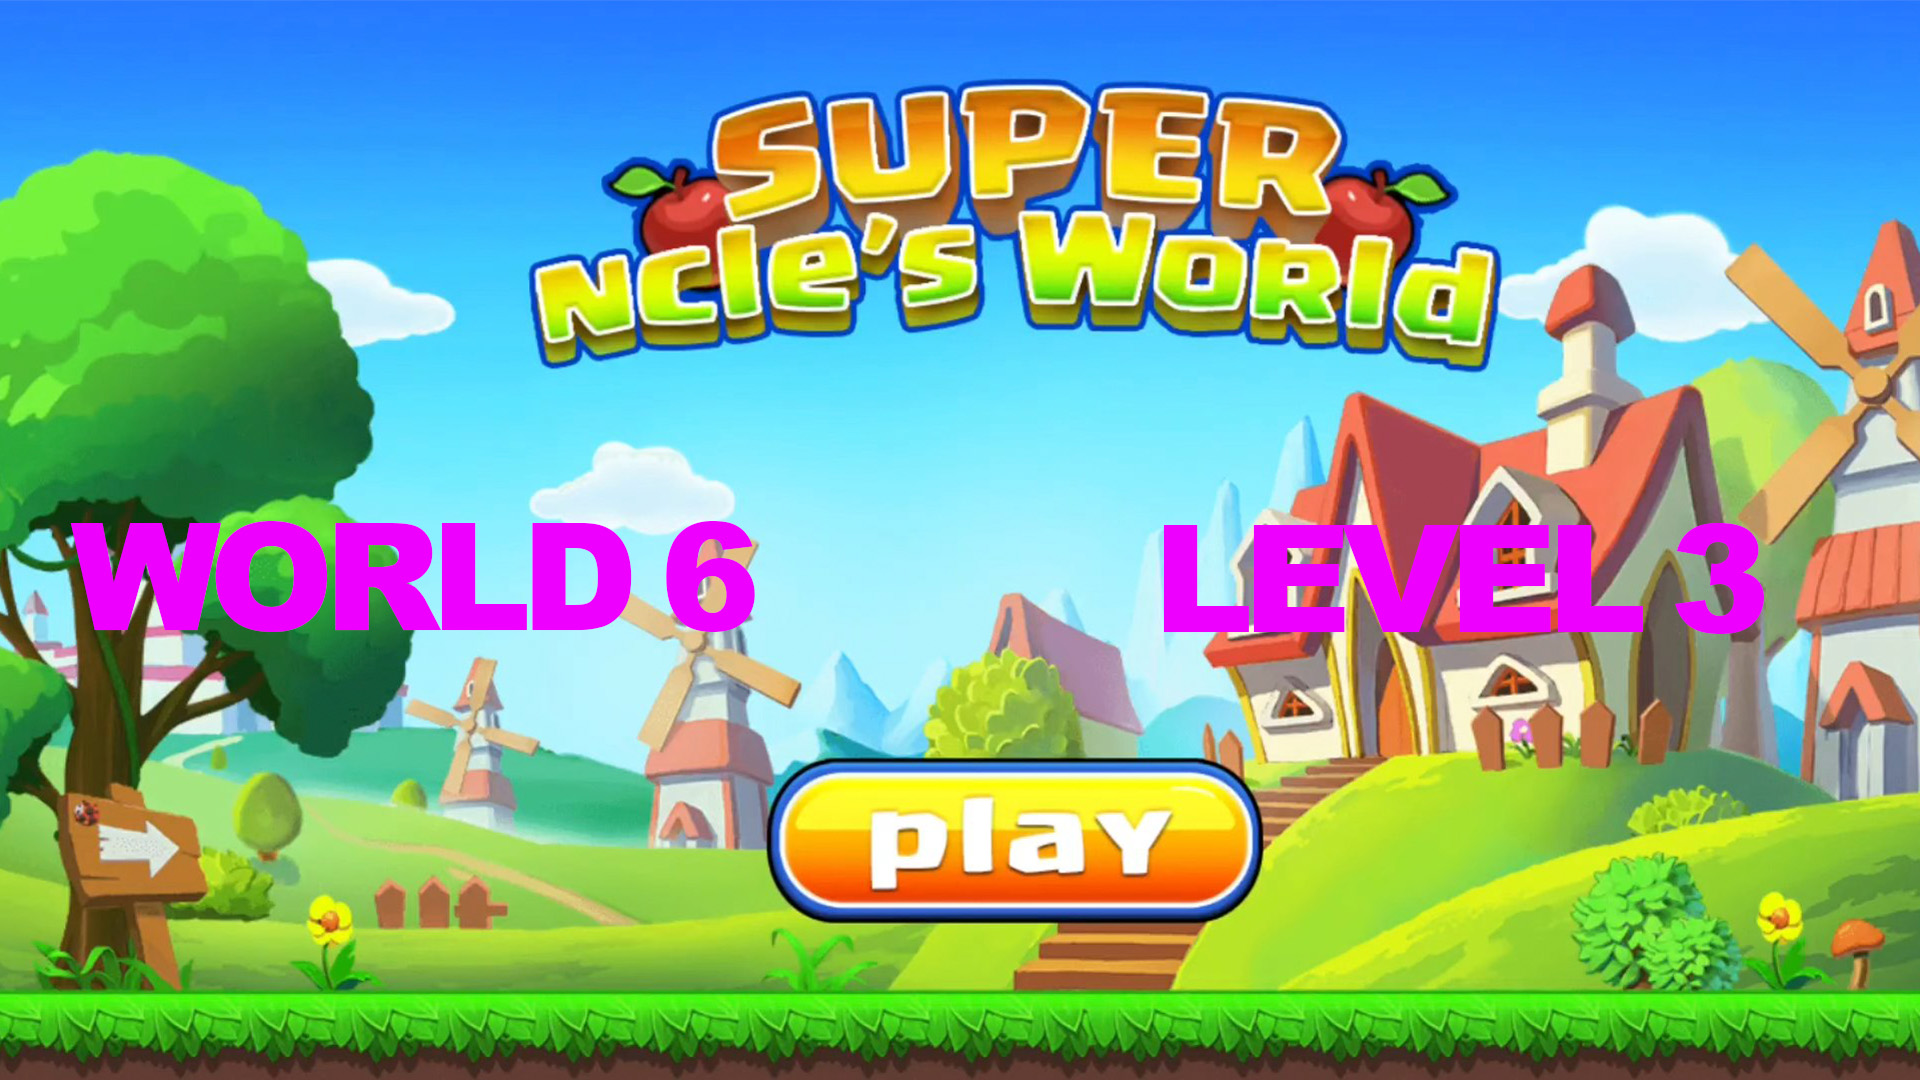 Super ncle's  World 6. Level 3